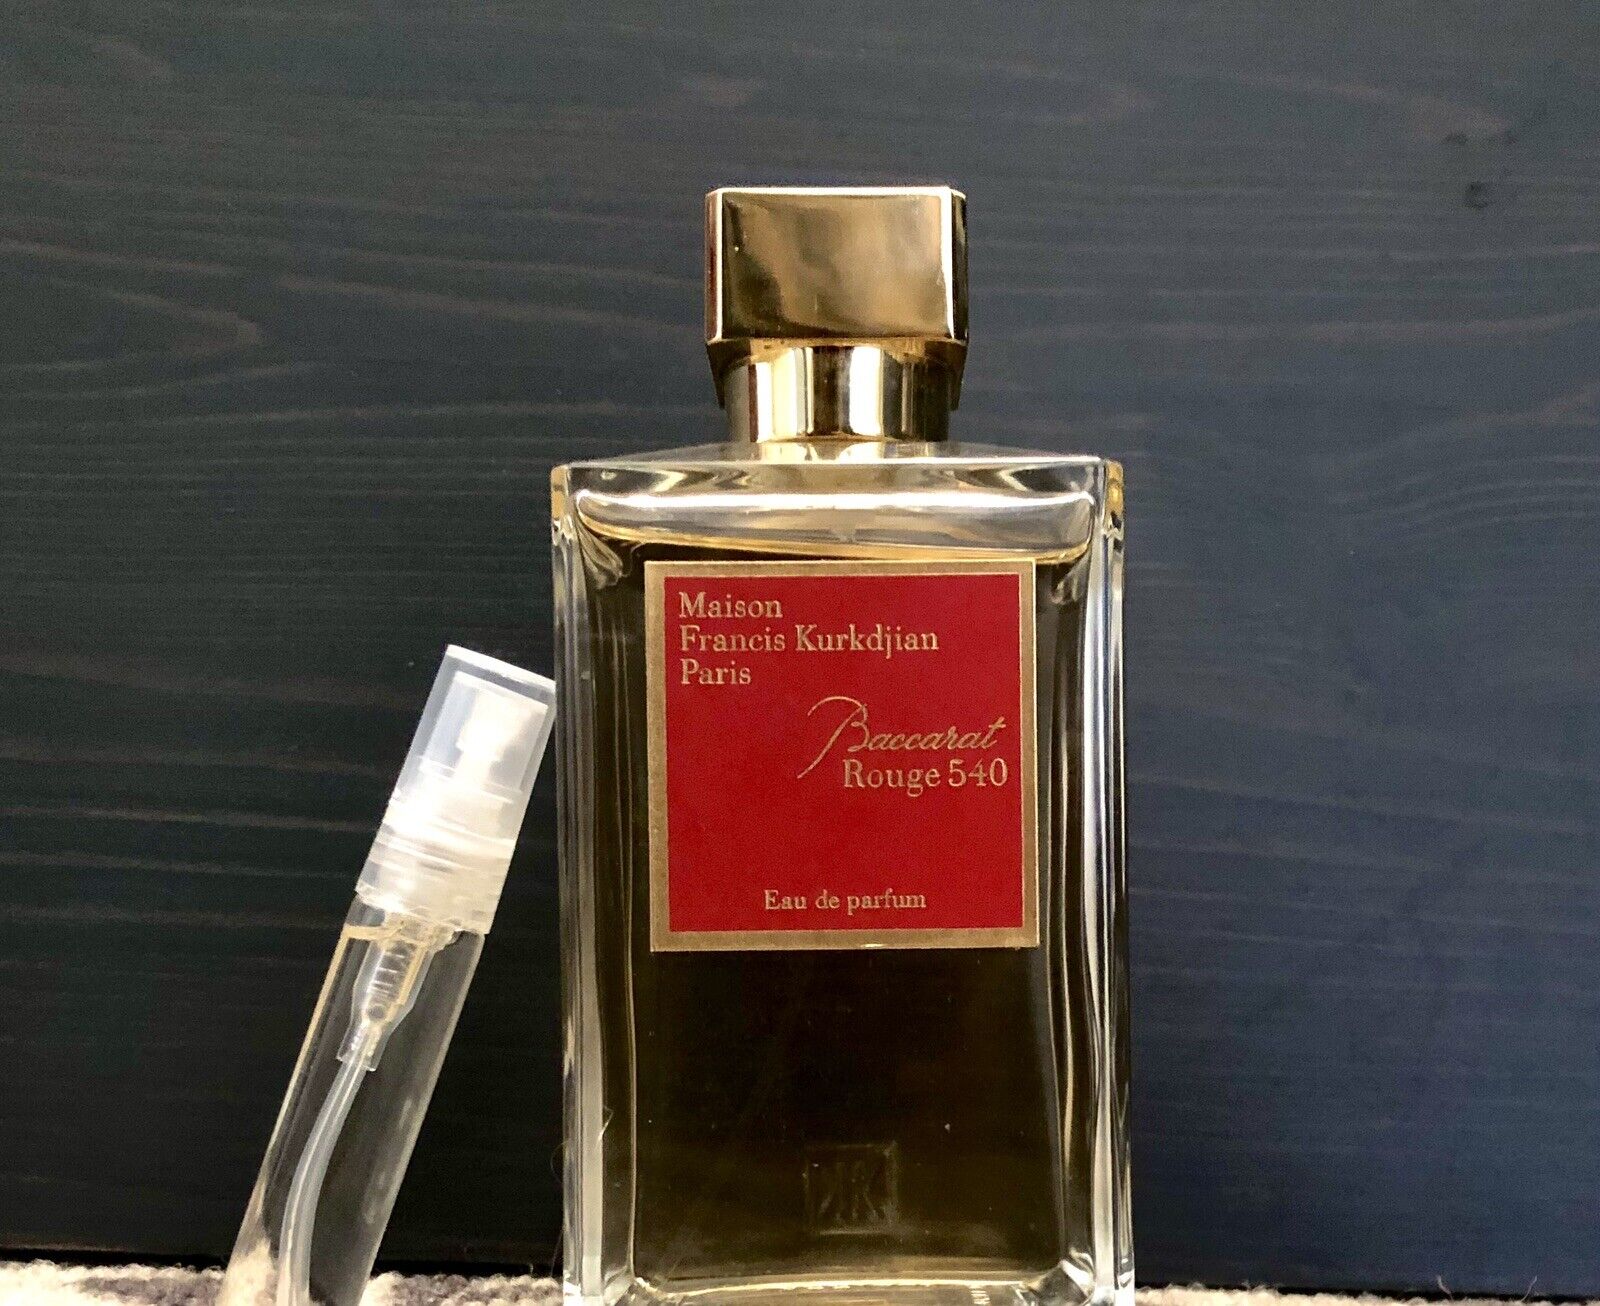 Baccarat Rouge 540 Perfume - Maison Francis Kurkdjian. 5ml Travel Size